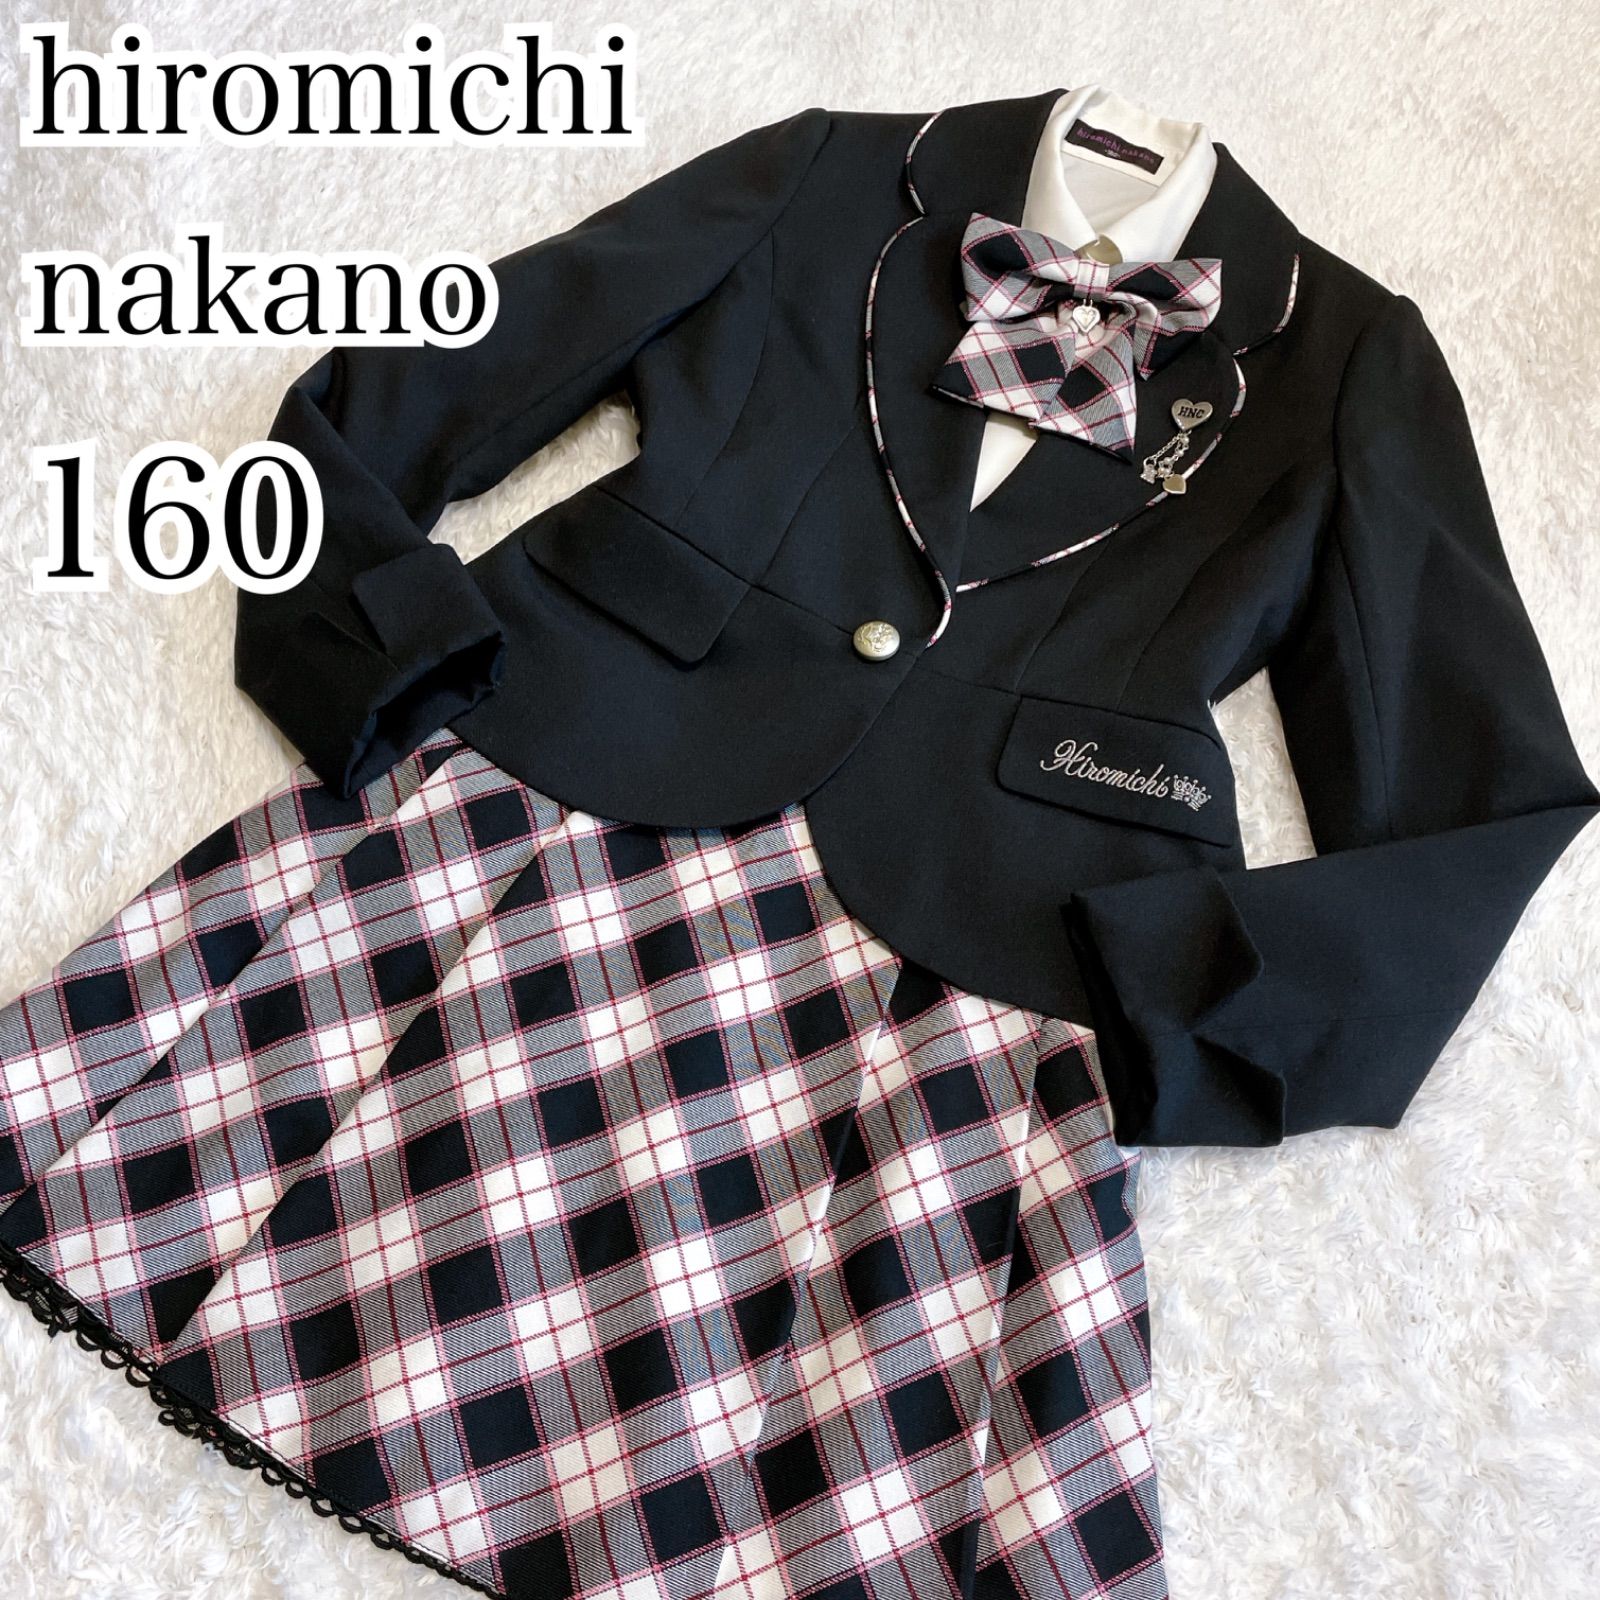 nakano hiromichi ナカノヒロミチ 160 卒業式 スーツ 女の子 | www.agb.md